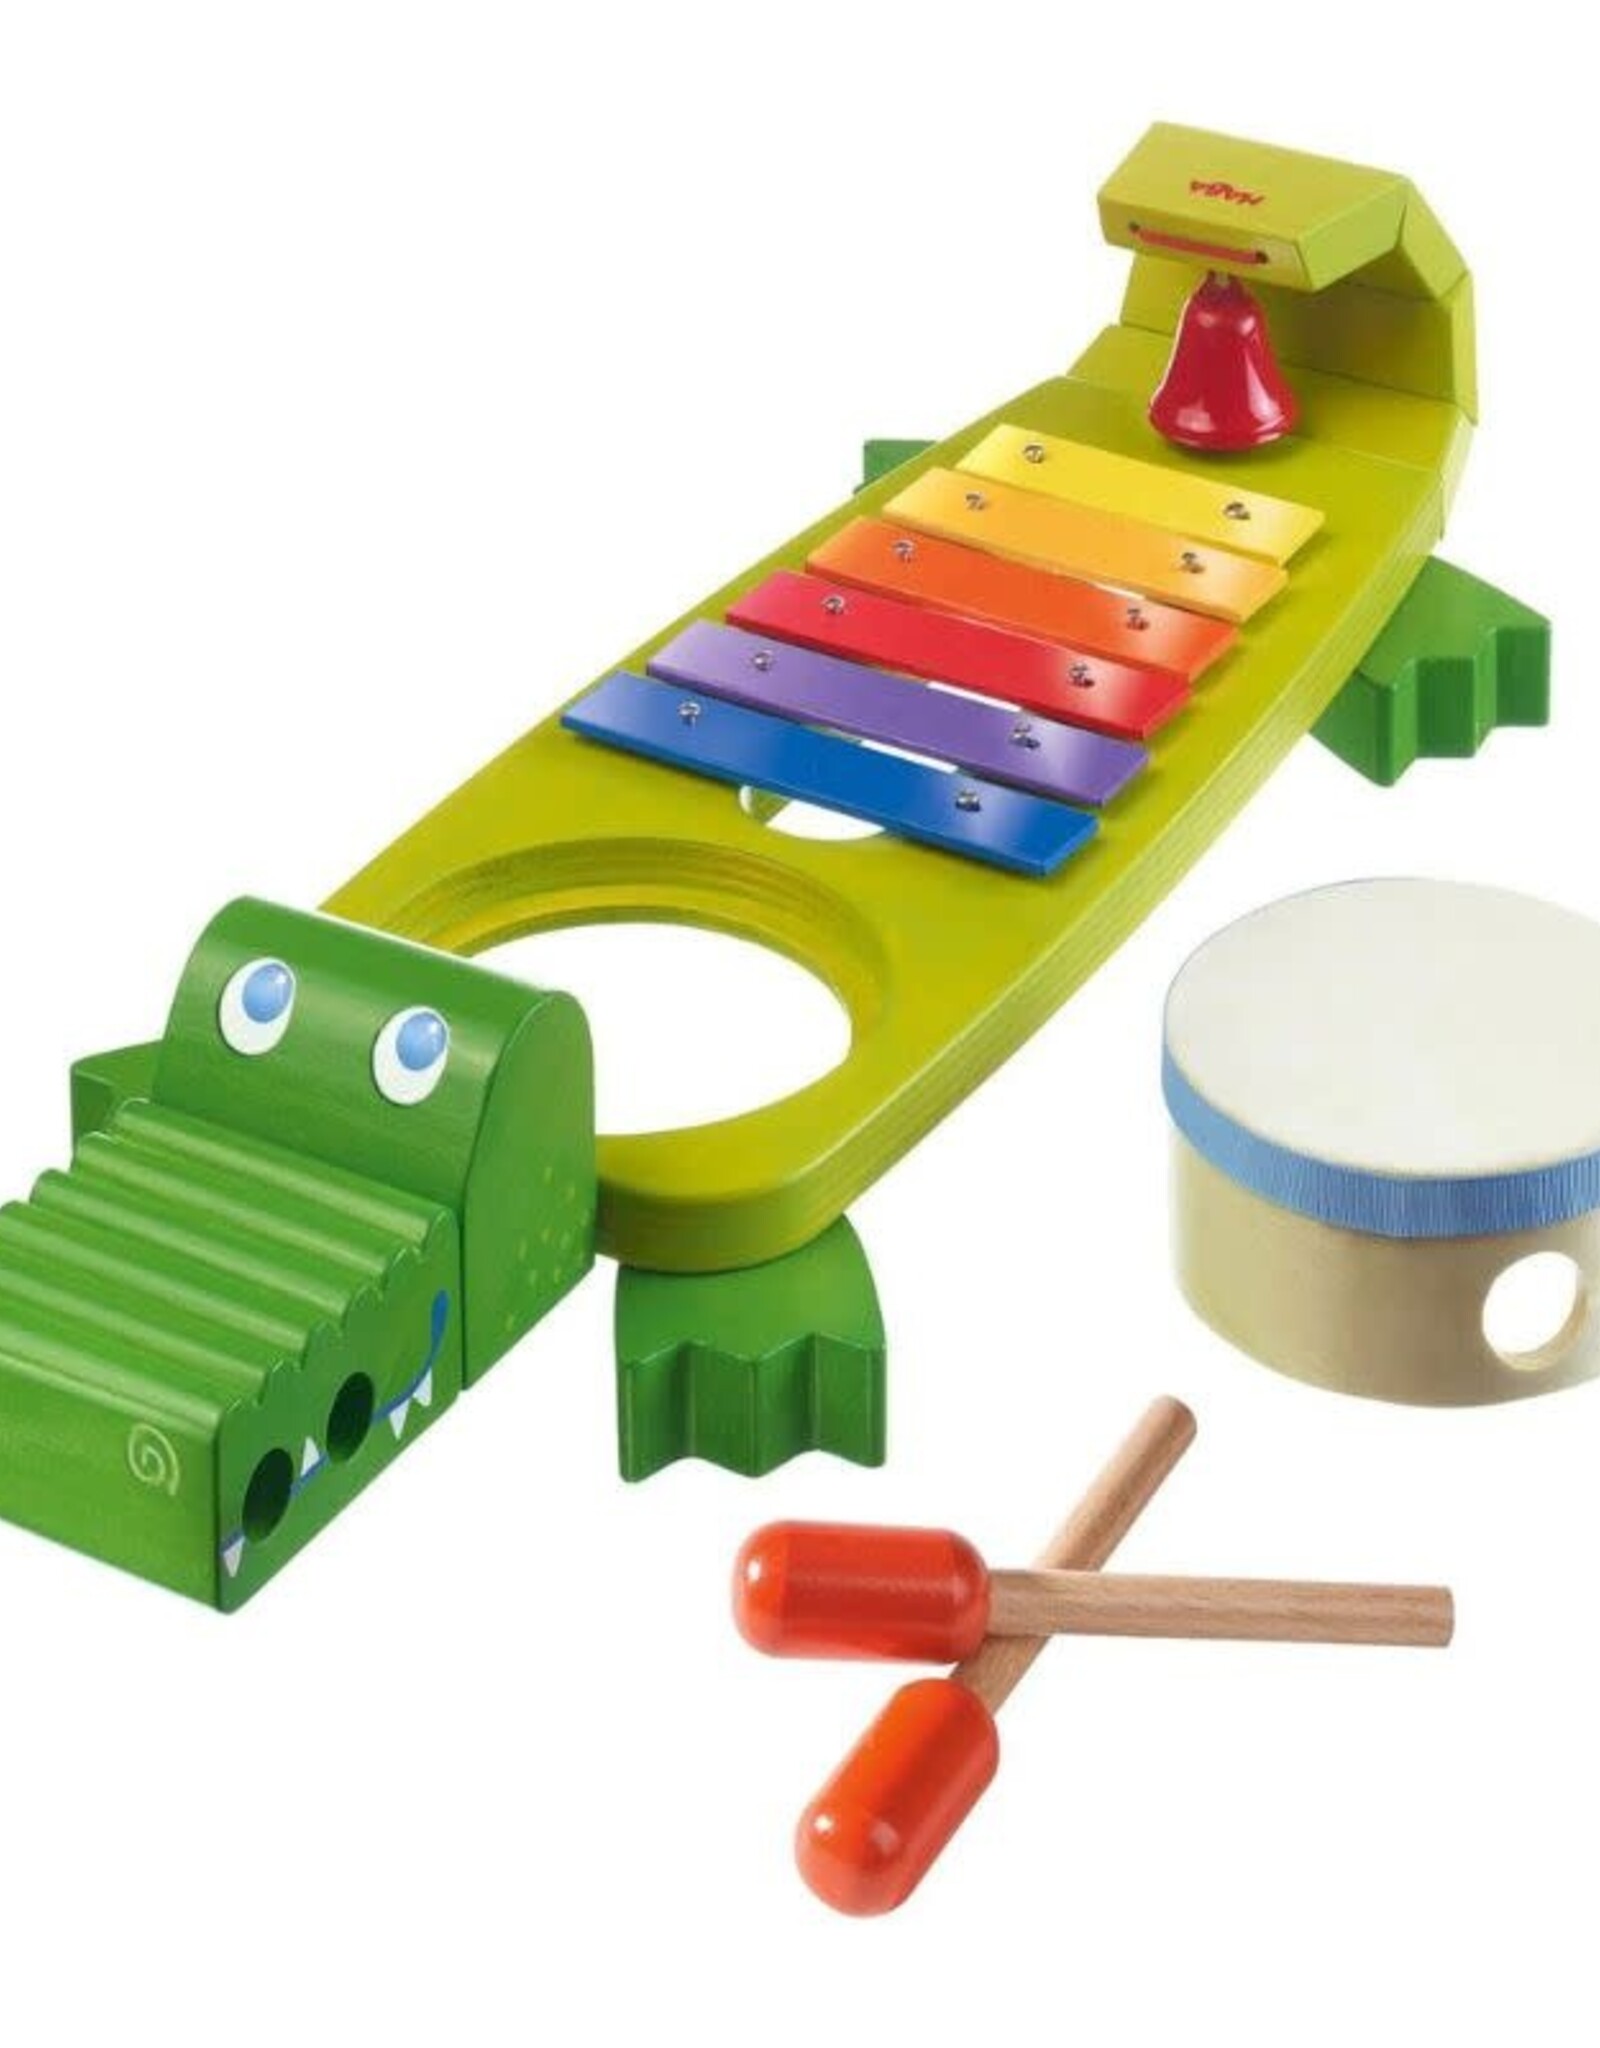 Symphony Croc  Musical Toy - Crockenspiel